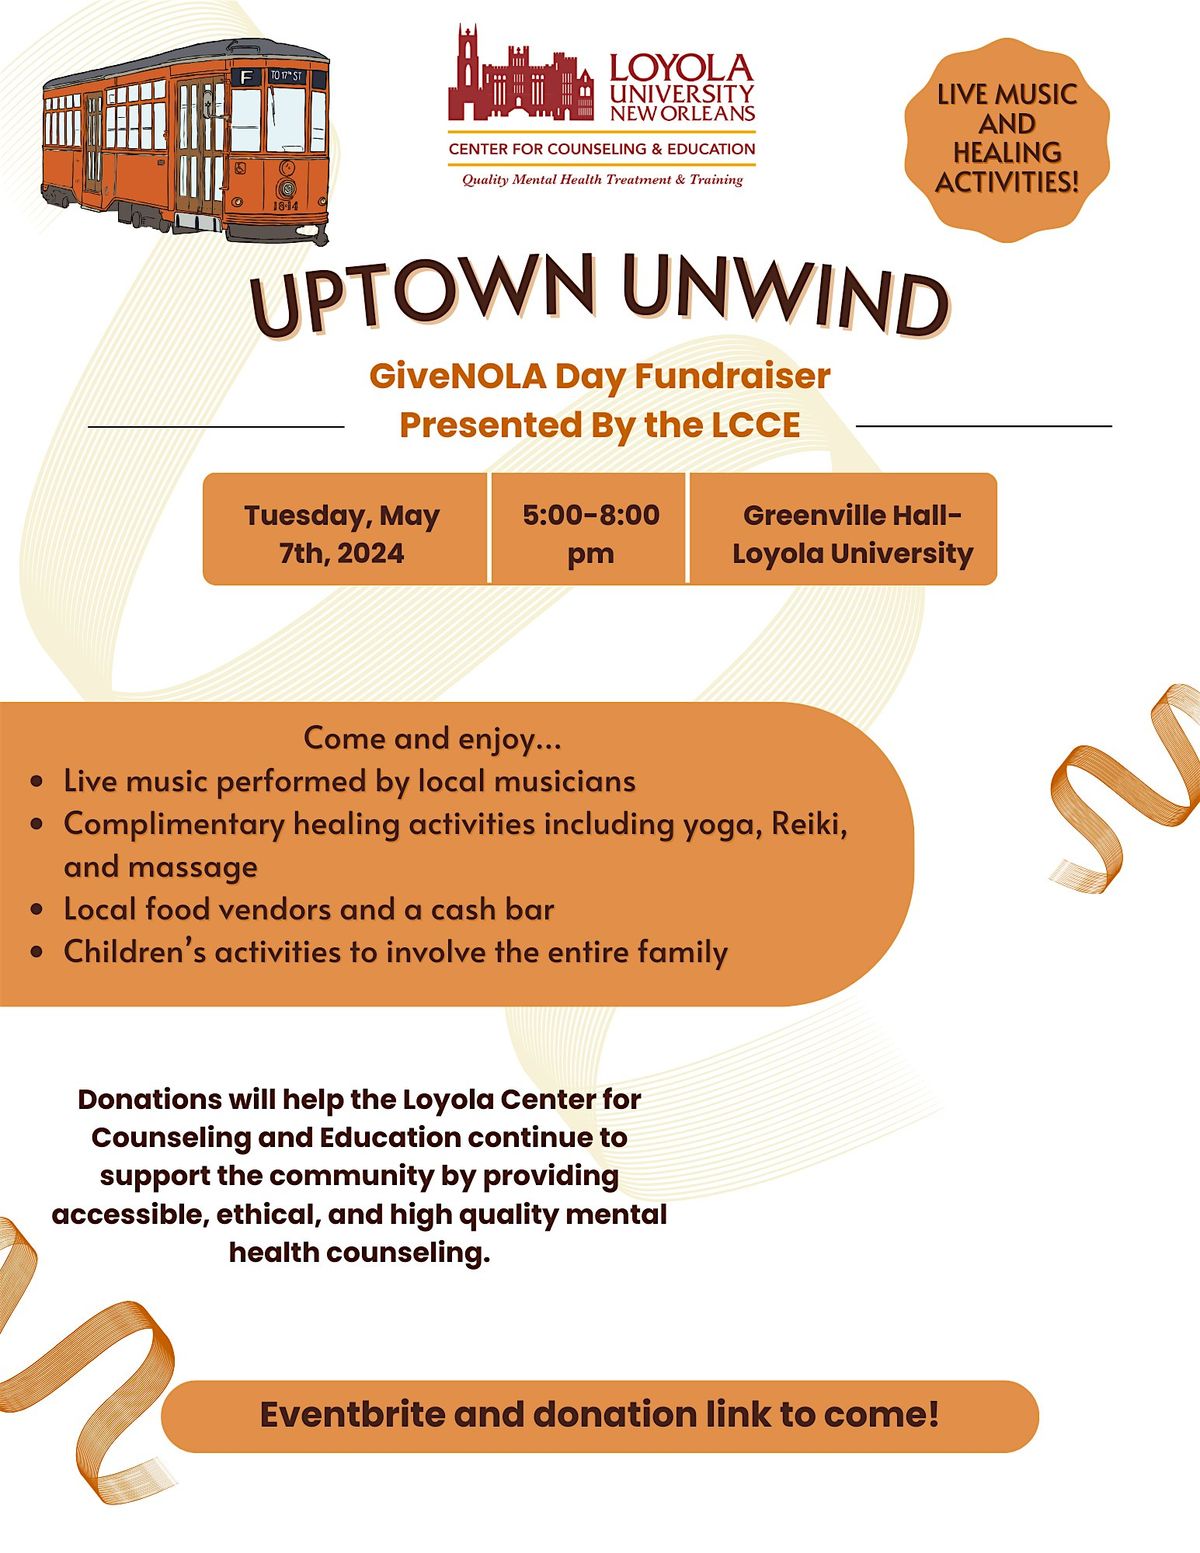 Uptown Unwind: A GiveNOLA Day Fundraiser